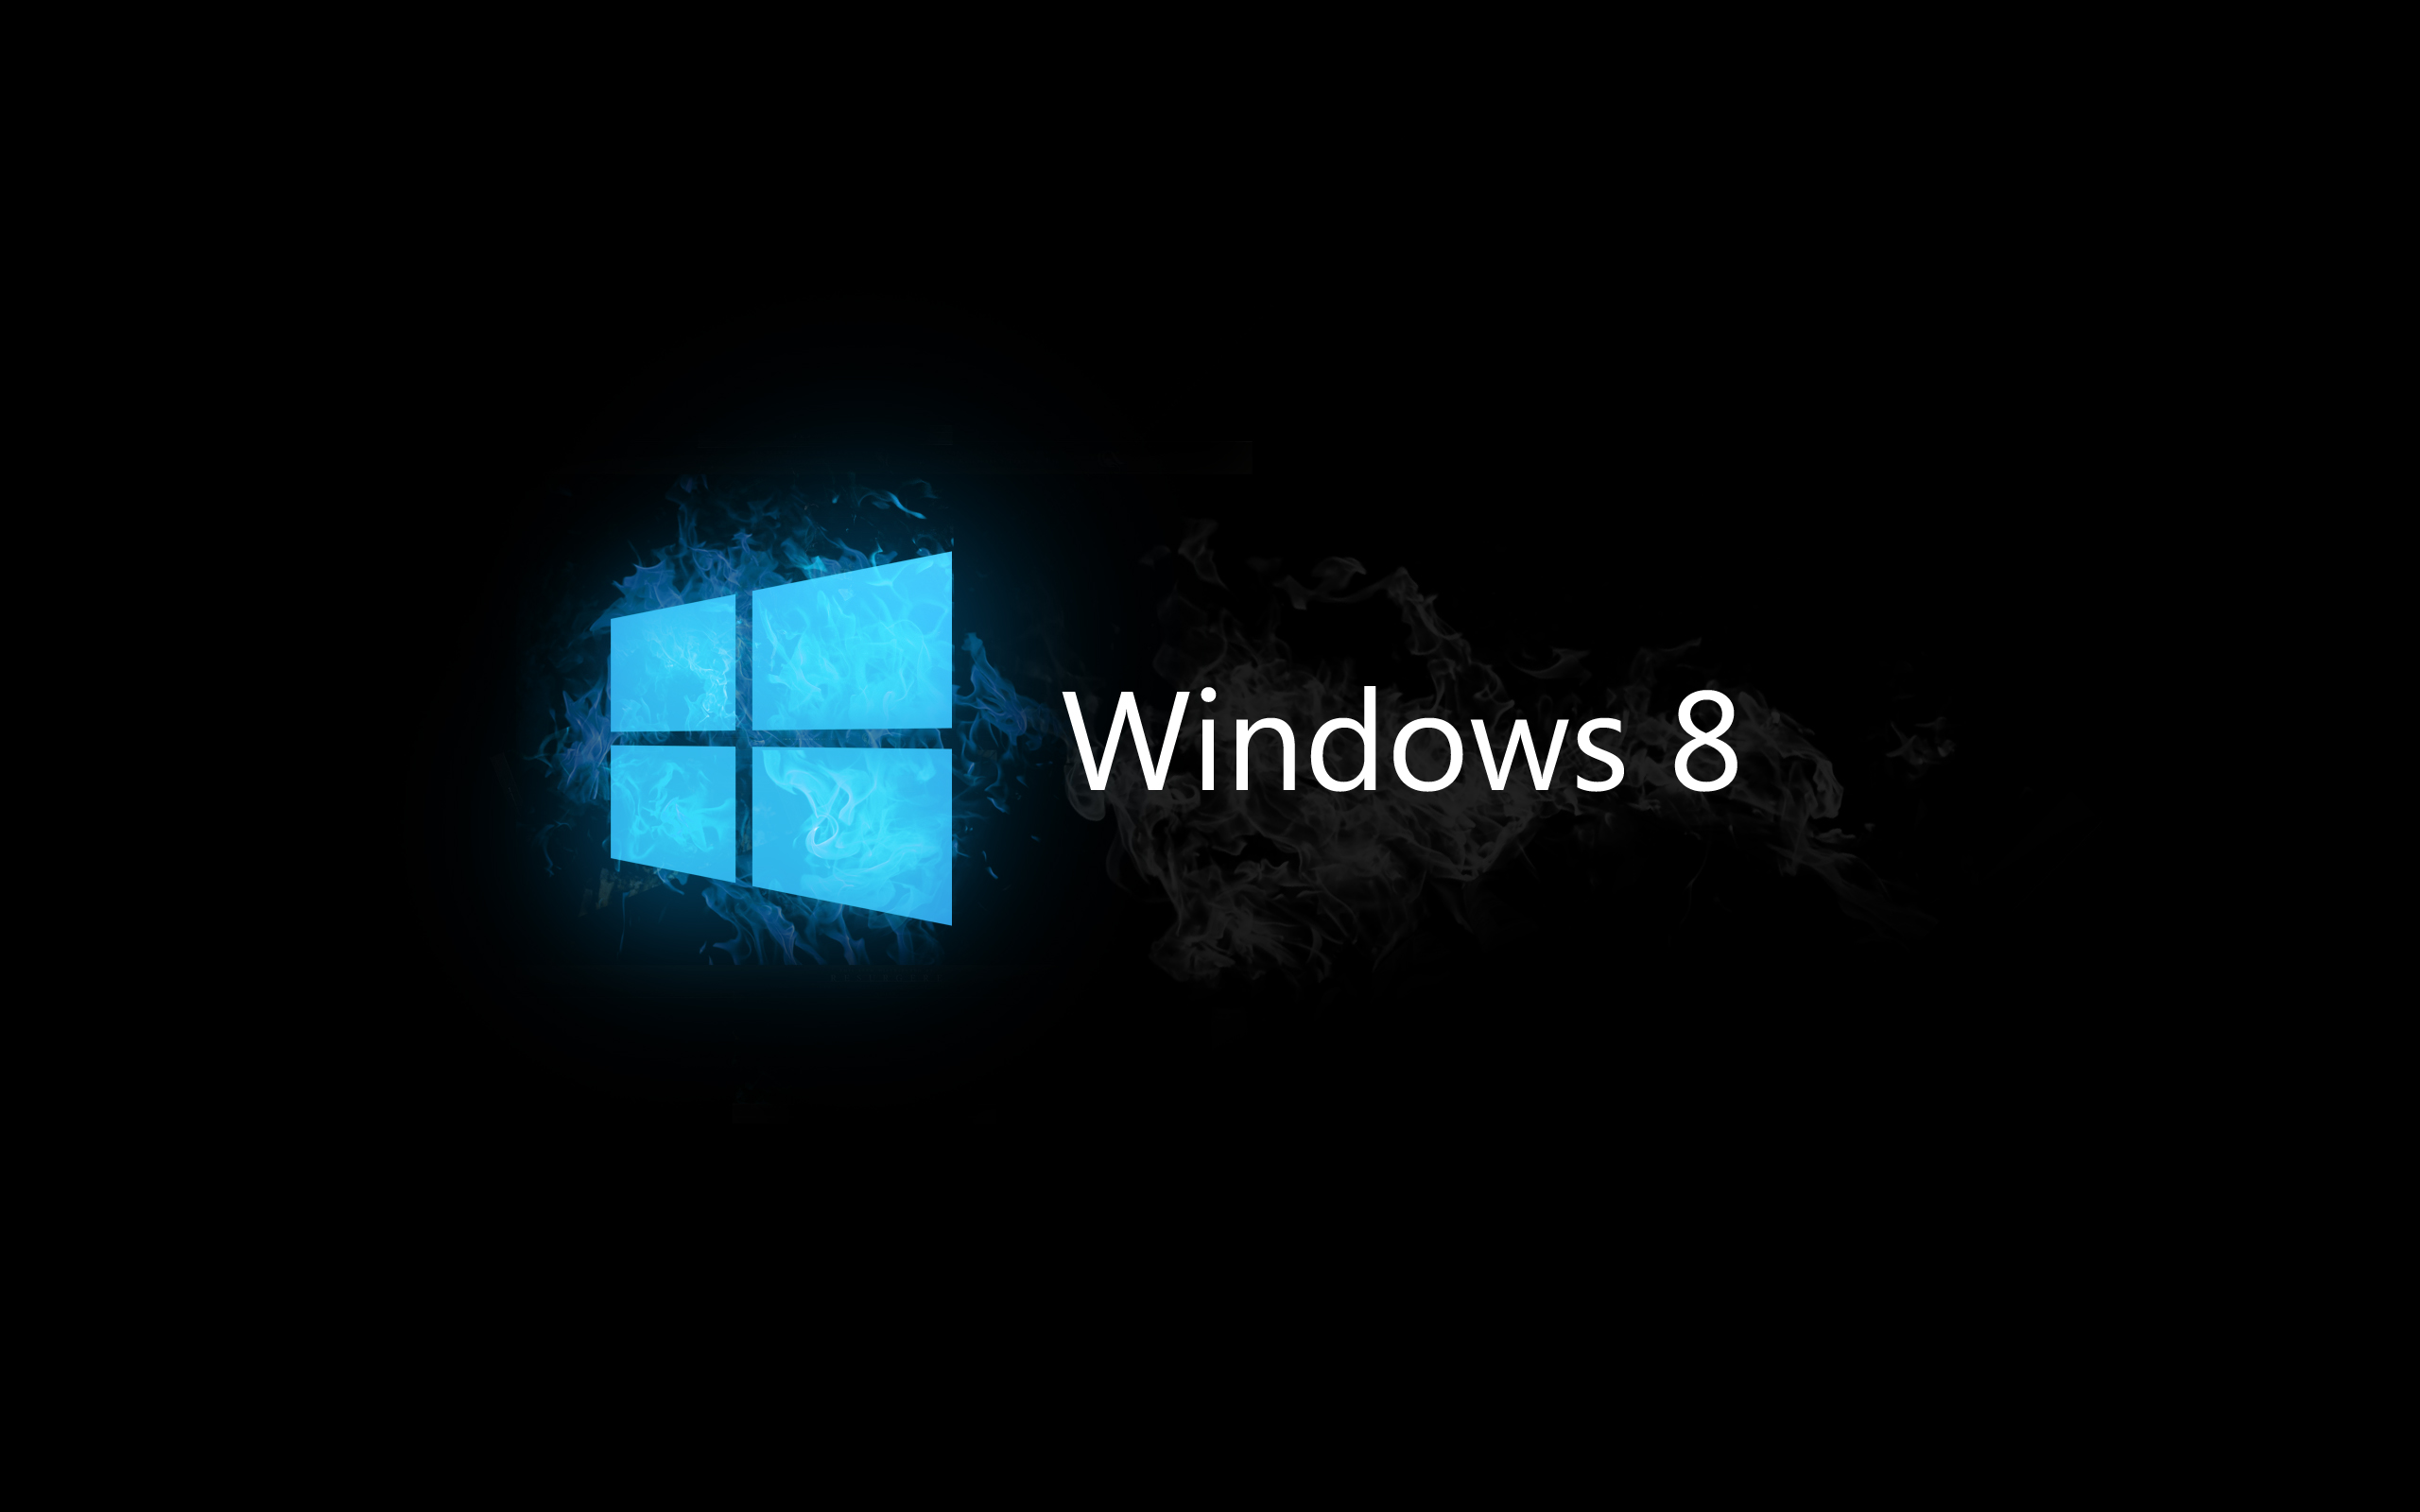 Windows 8 desktop backgrounds 2